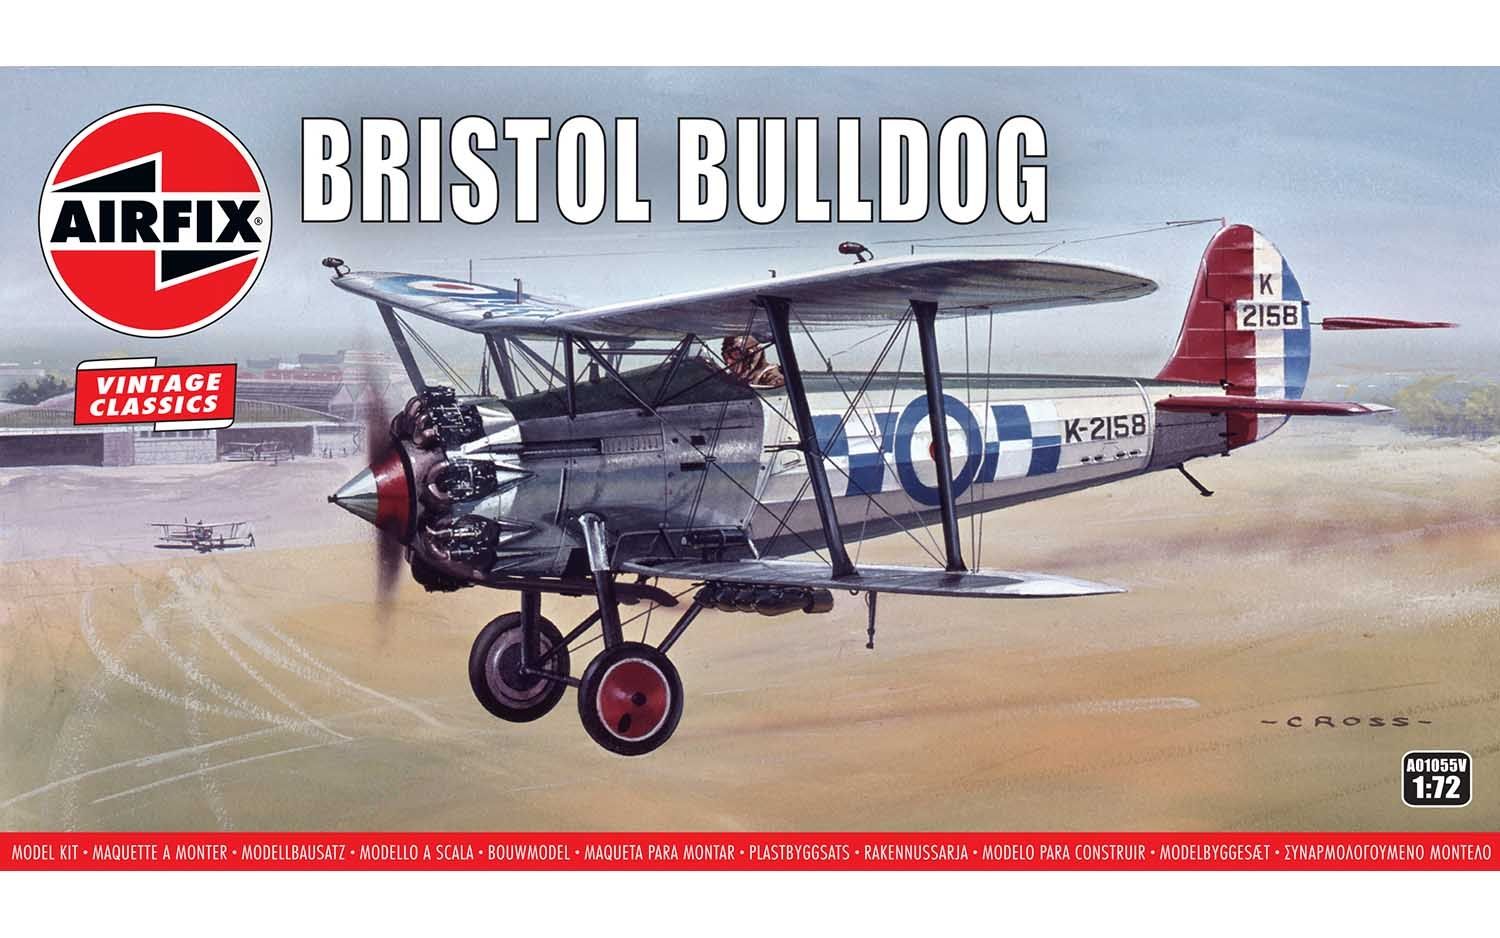 Airfix 1/72 Scale Bristol Bulldog Model Kit